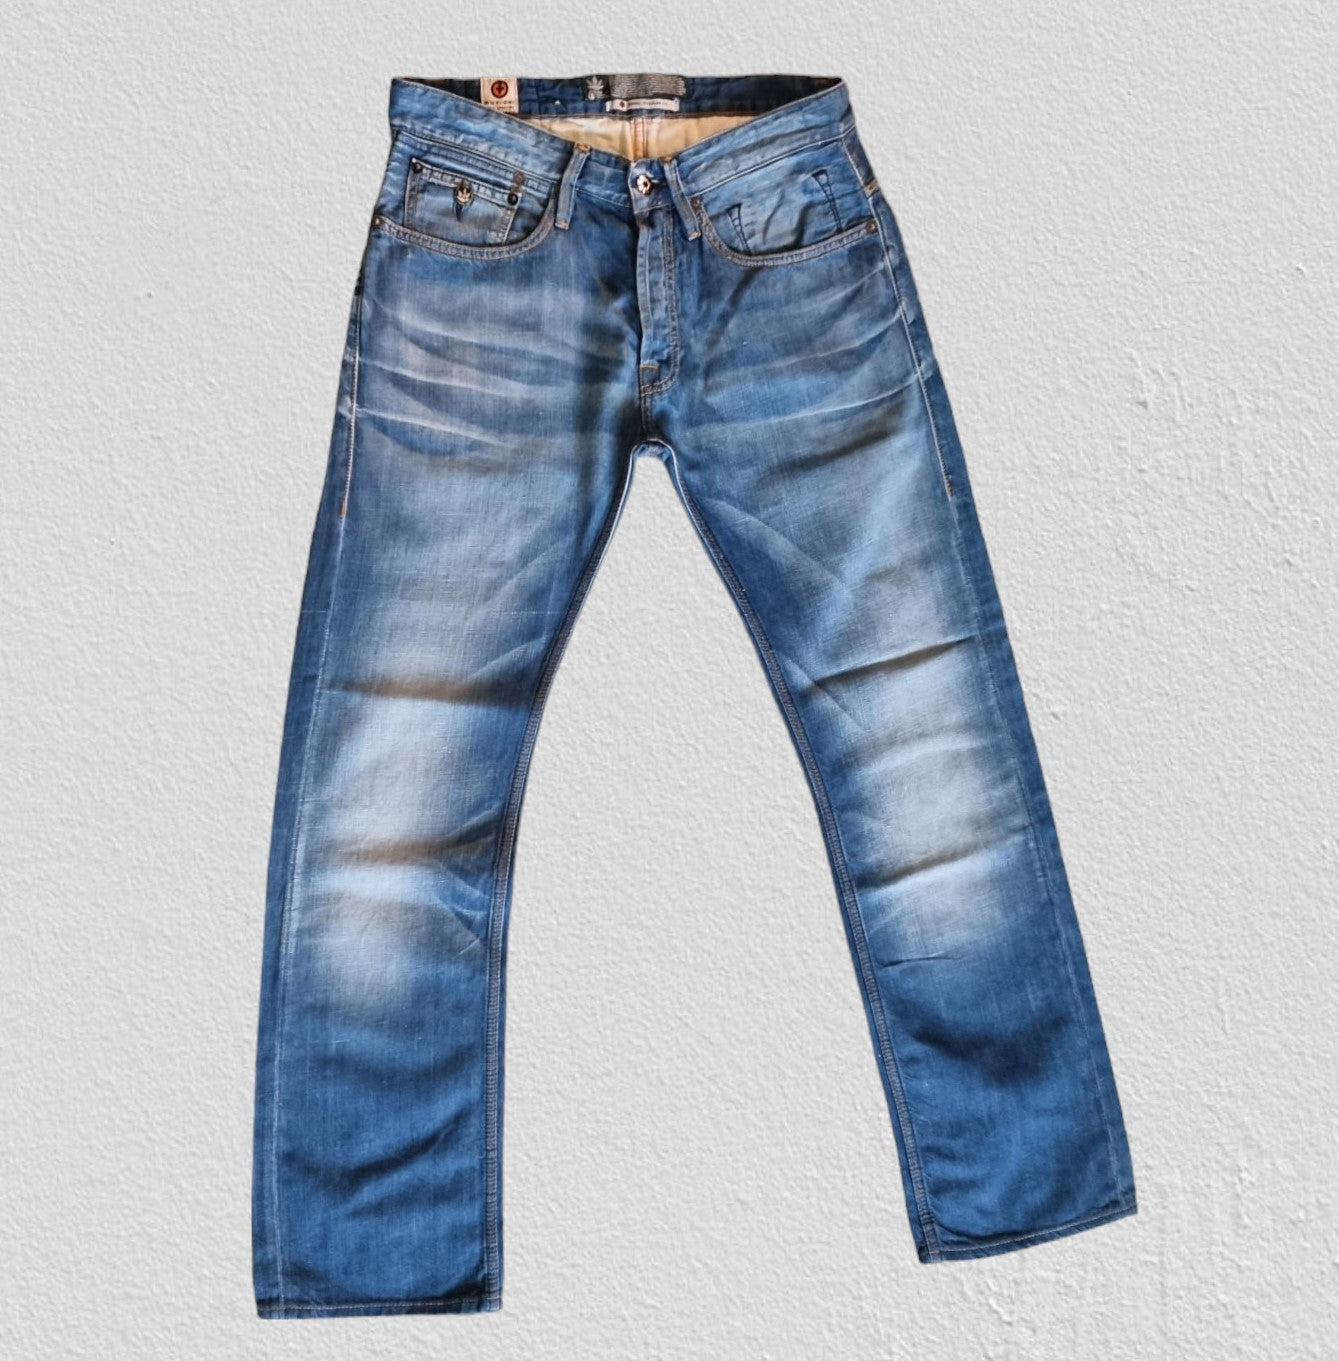 KUYICHI Daniel Men's Blue Regular Fit Straight Leg Faded Denim Jeans. Size W34 Timeless Fashions